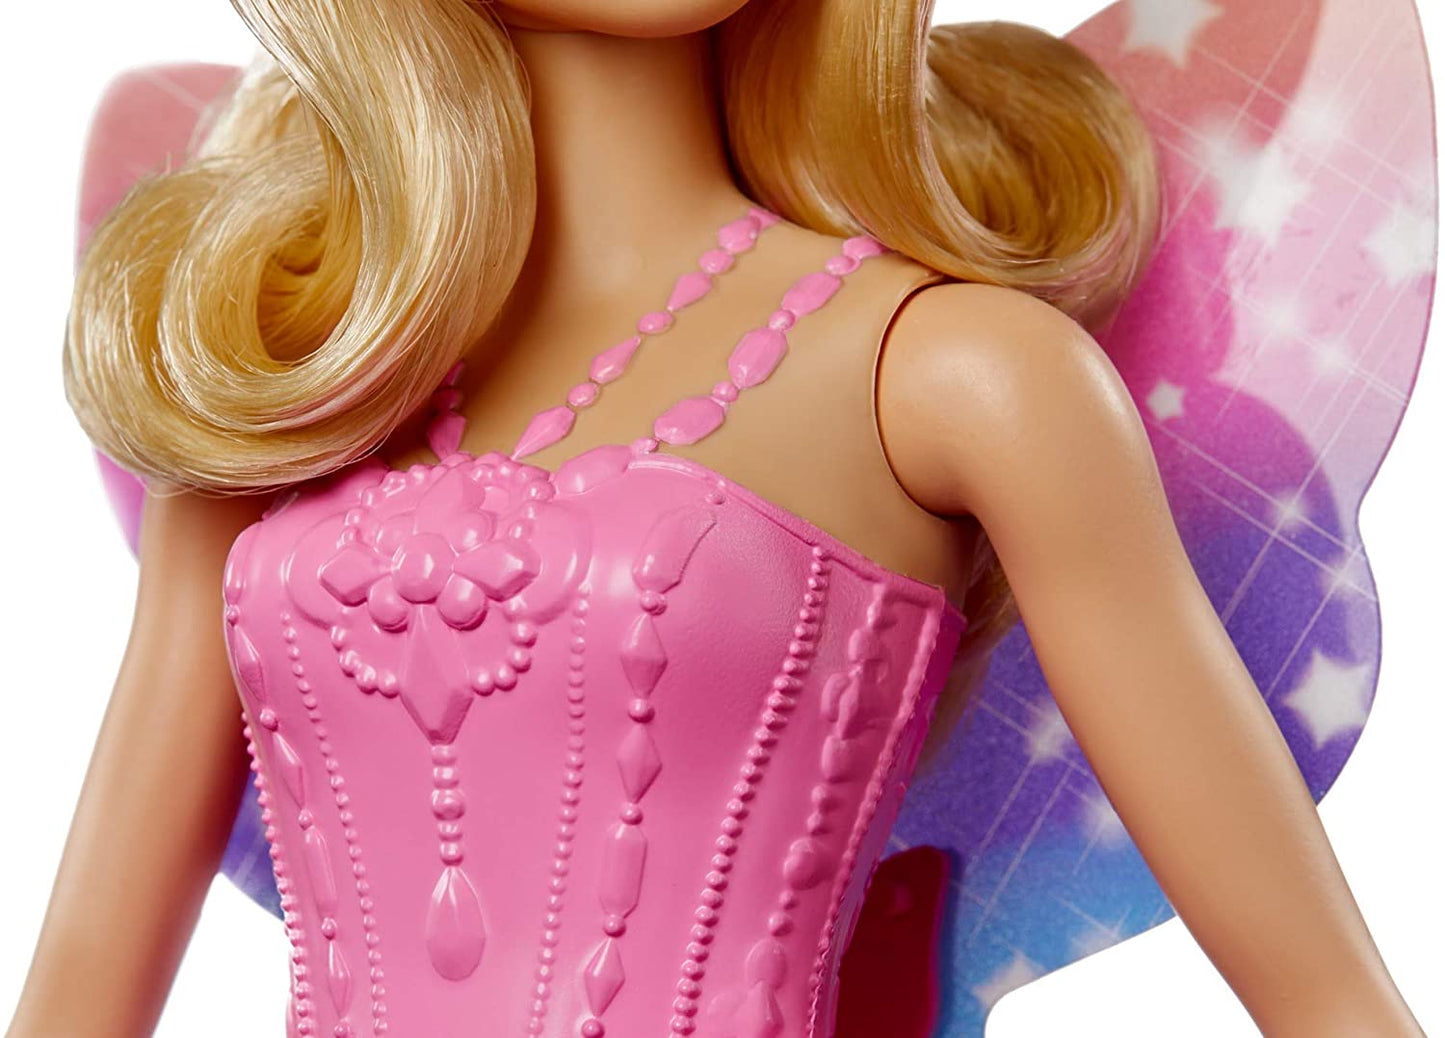 Barbie Dreamtopia - Winged Fairy Doll